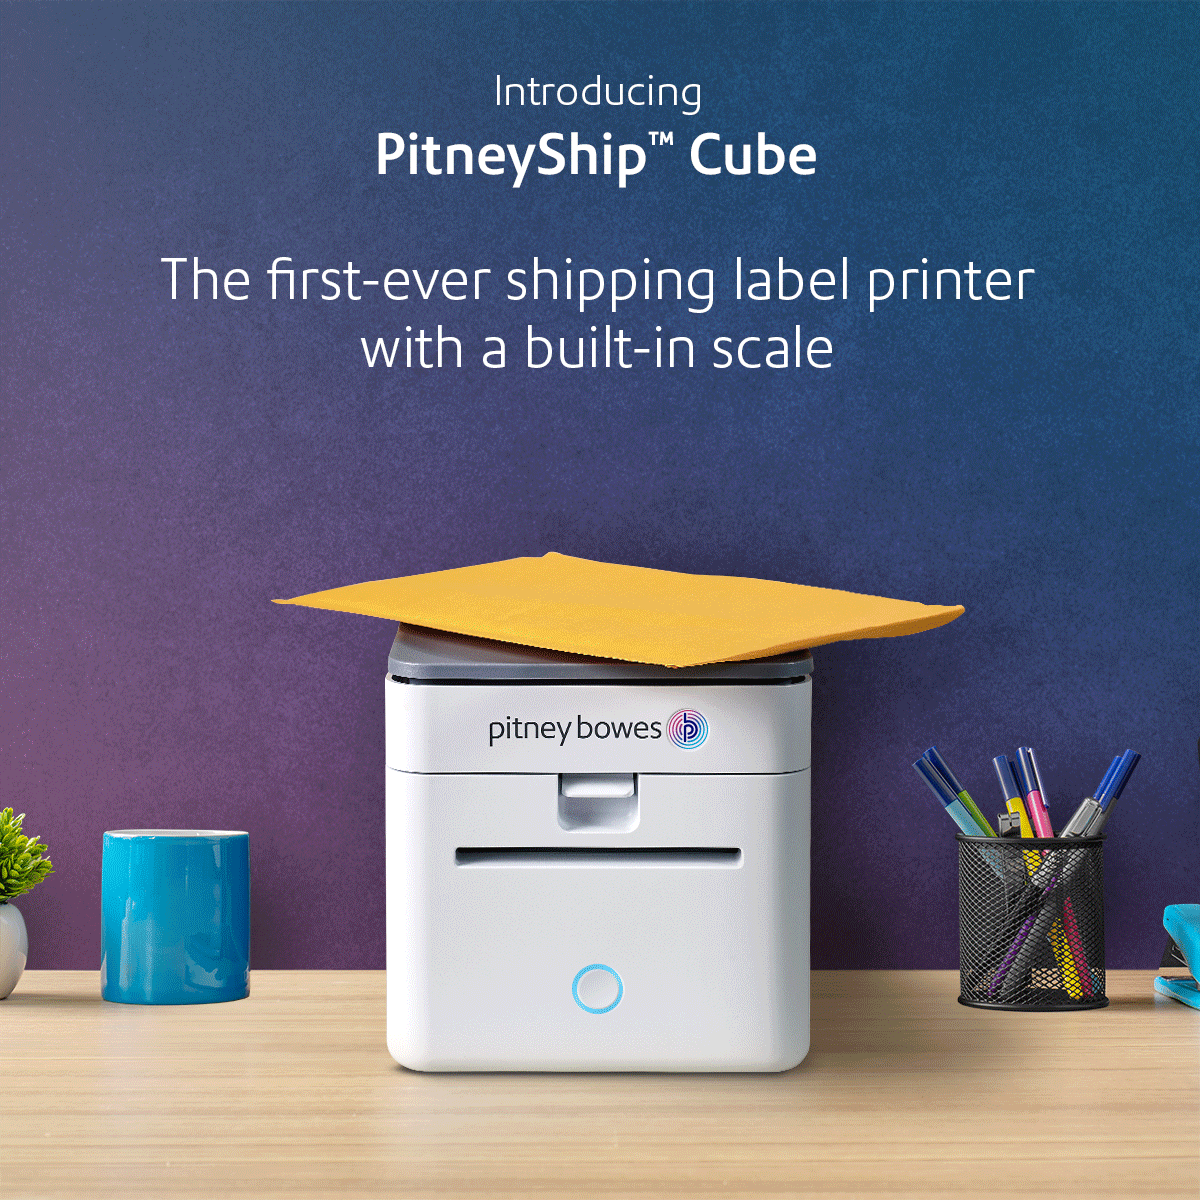 Introduction of the PitneyShip Cube shipping label printer, social media written by Joseph Ehlinger, copywriter